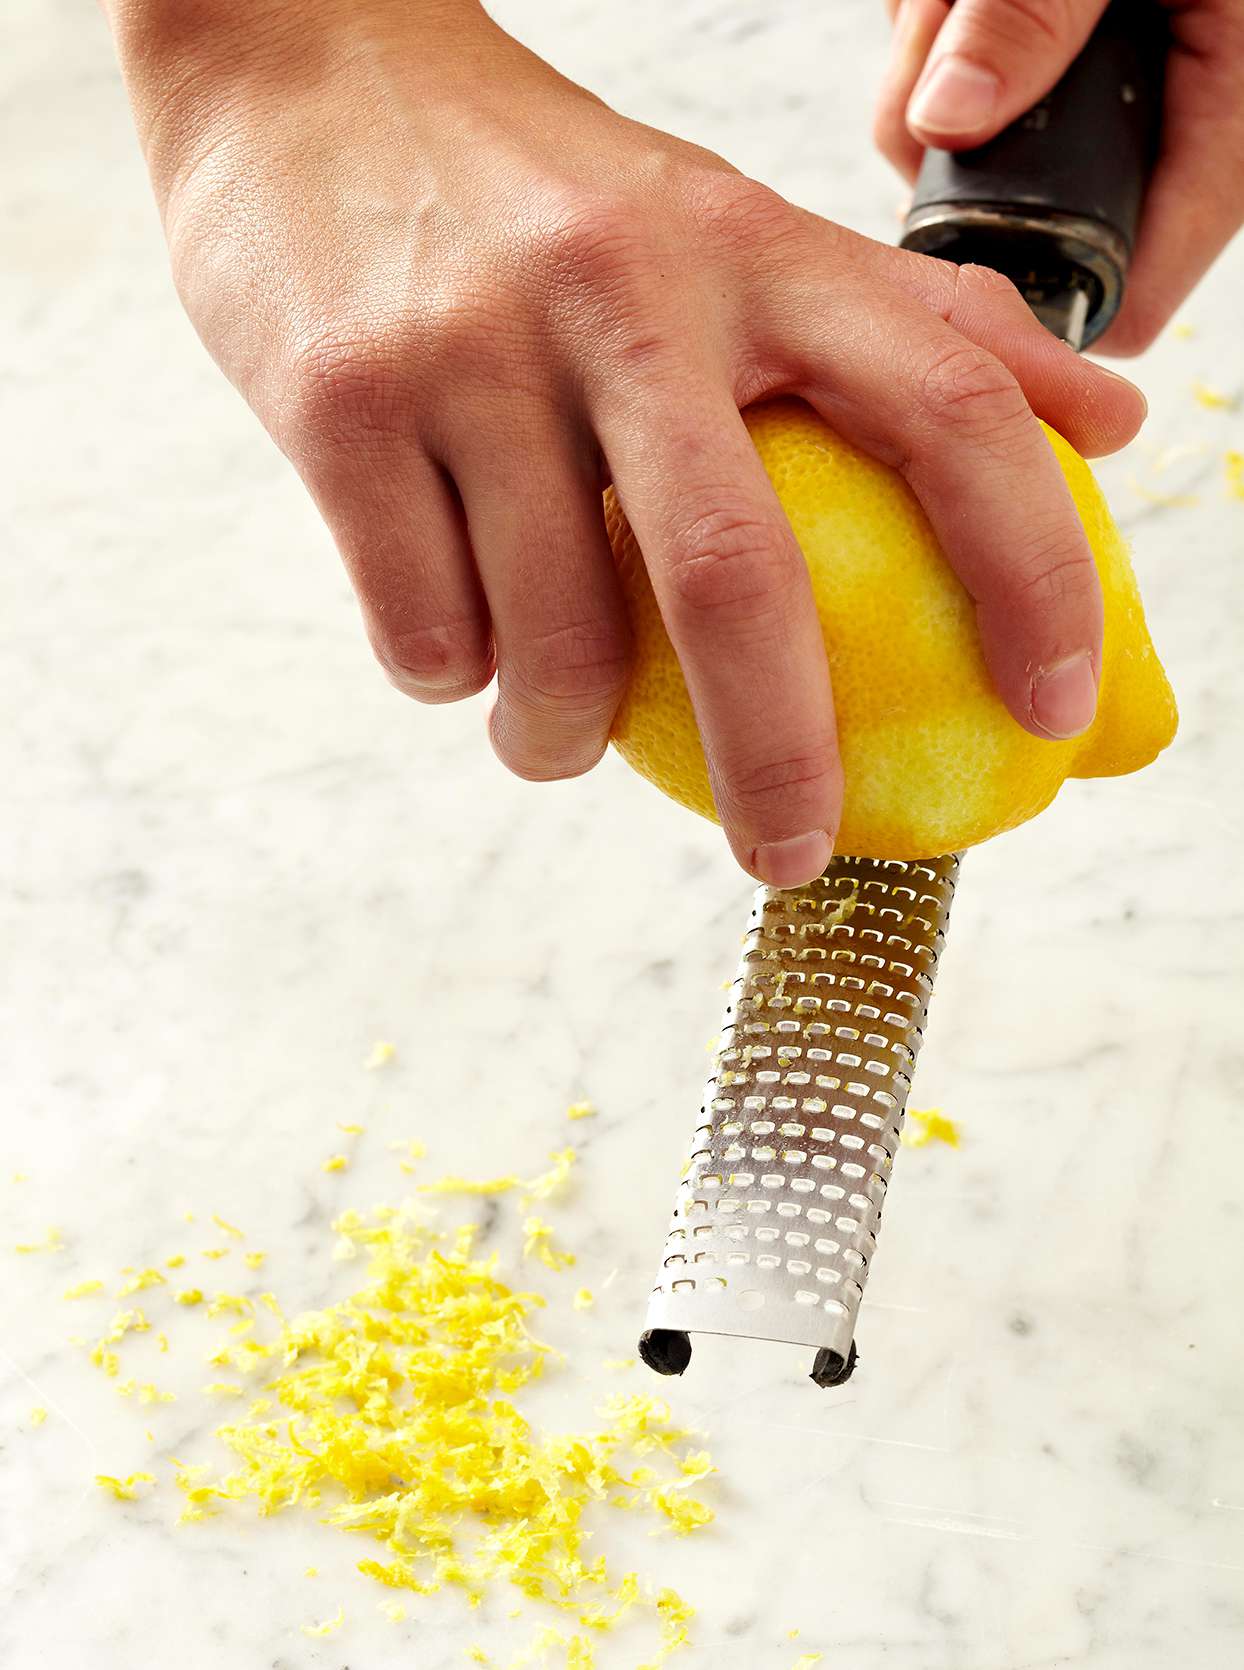 Grating lemon on micro plane